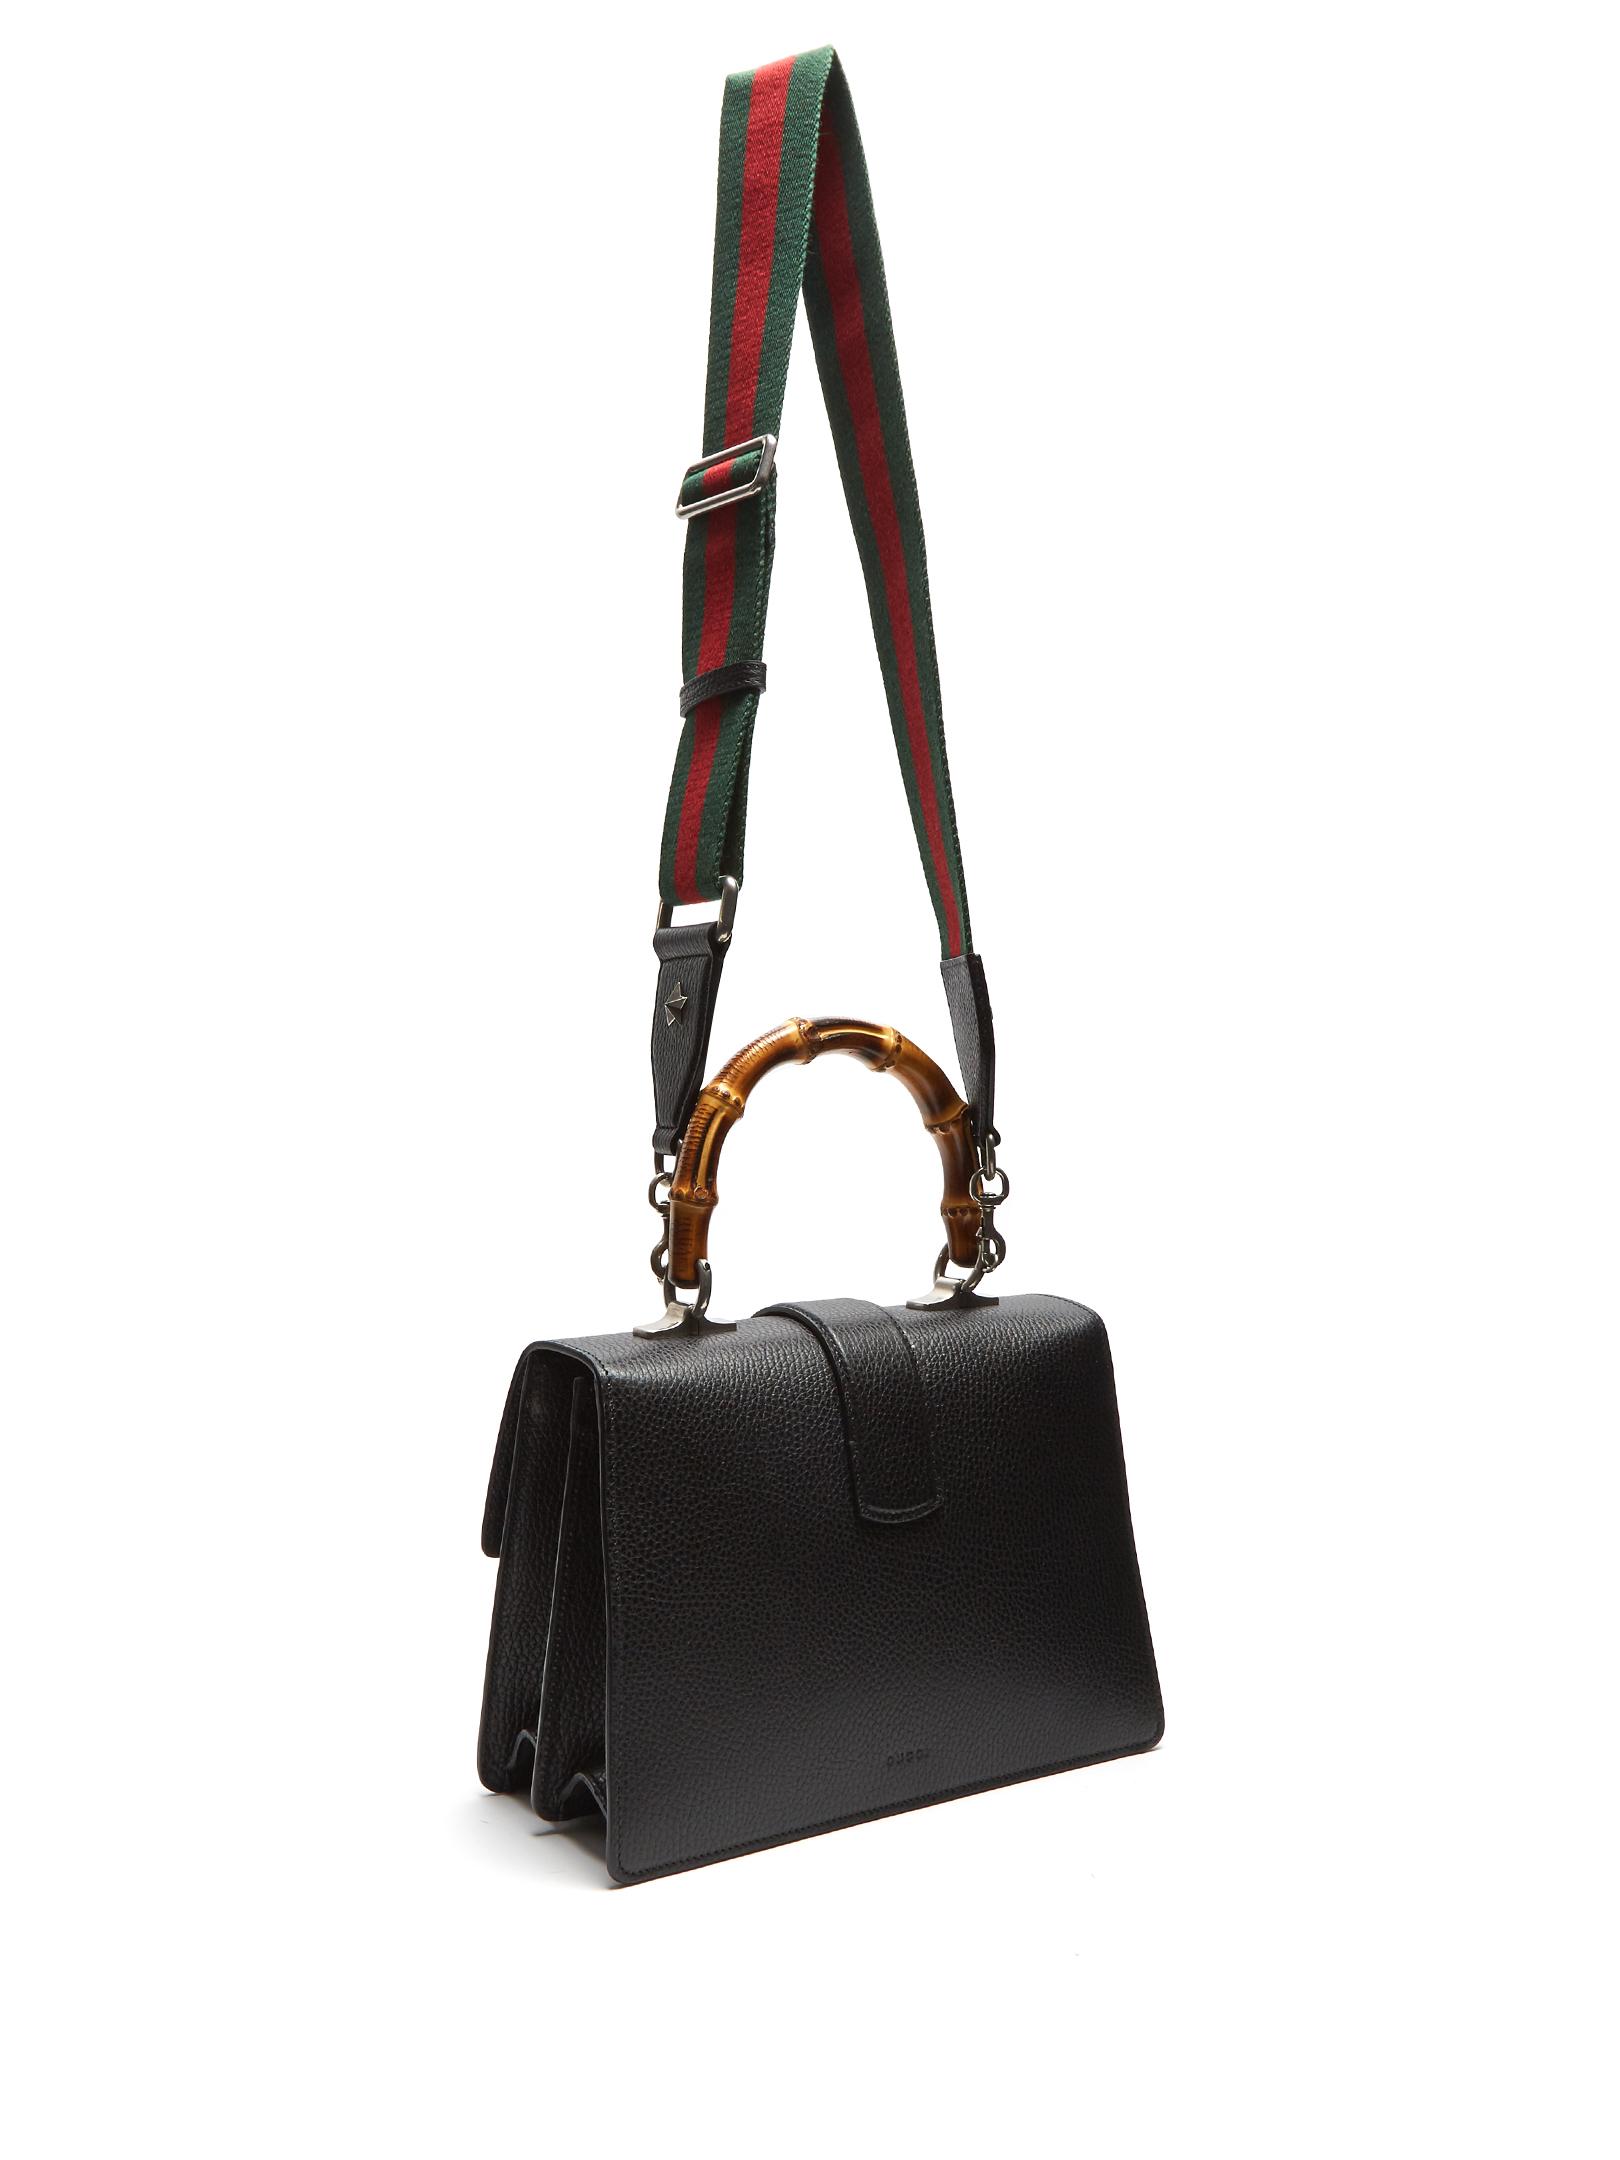 GUCCI Dionysus Medium Bamboo Web Top Handle Calfskin Leather Bag Red $3750  Strap